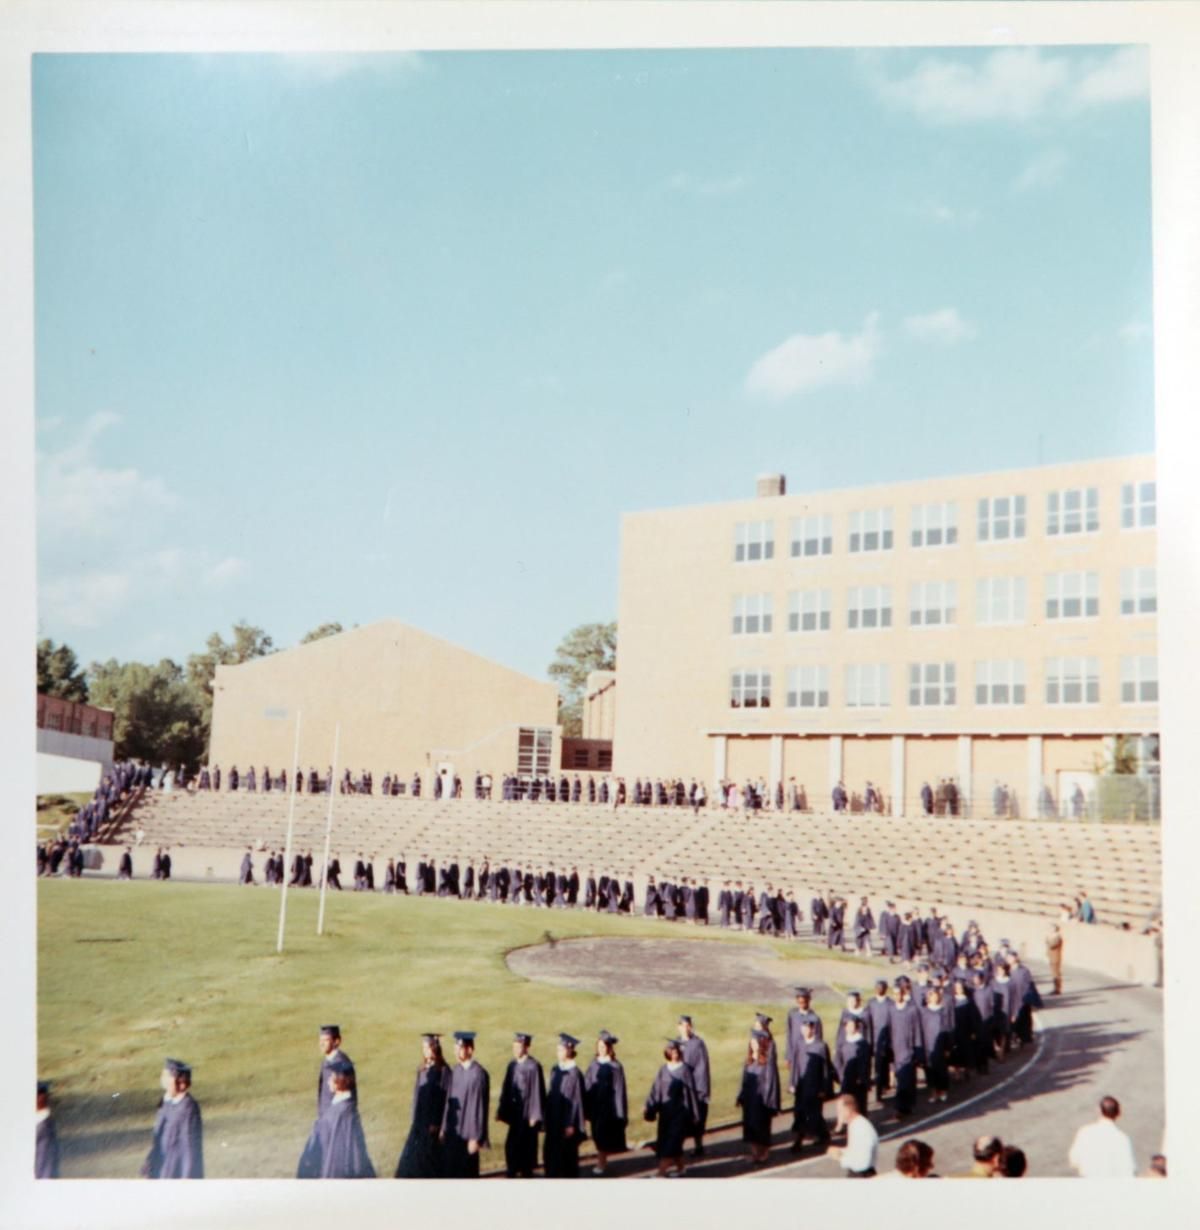 A photo from Judy Gladney's University City High School graduation ceremony in 1969. Image courtesy of Judy Gladney. United States, 1969.